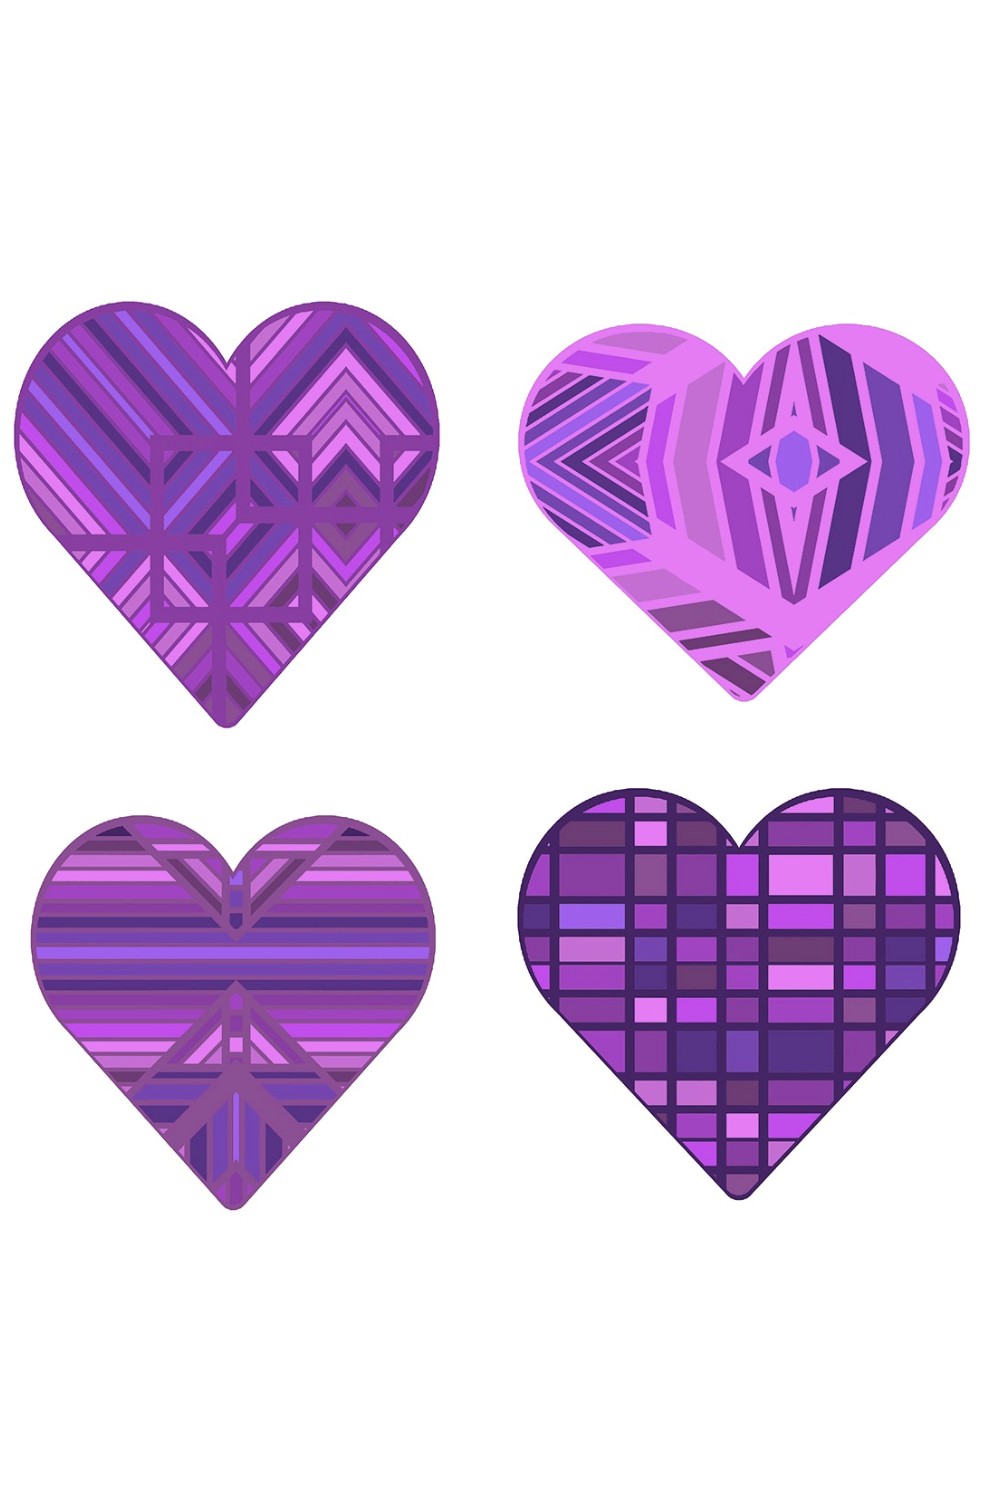 Pretty in Purple Hearts pinterest preview image.